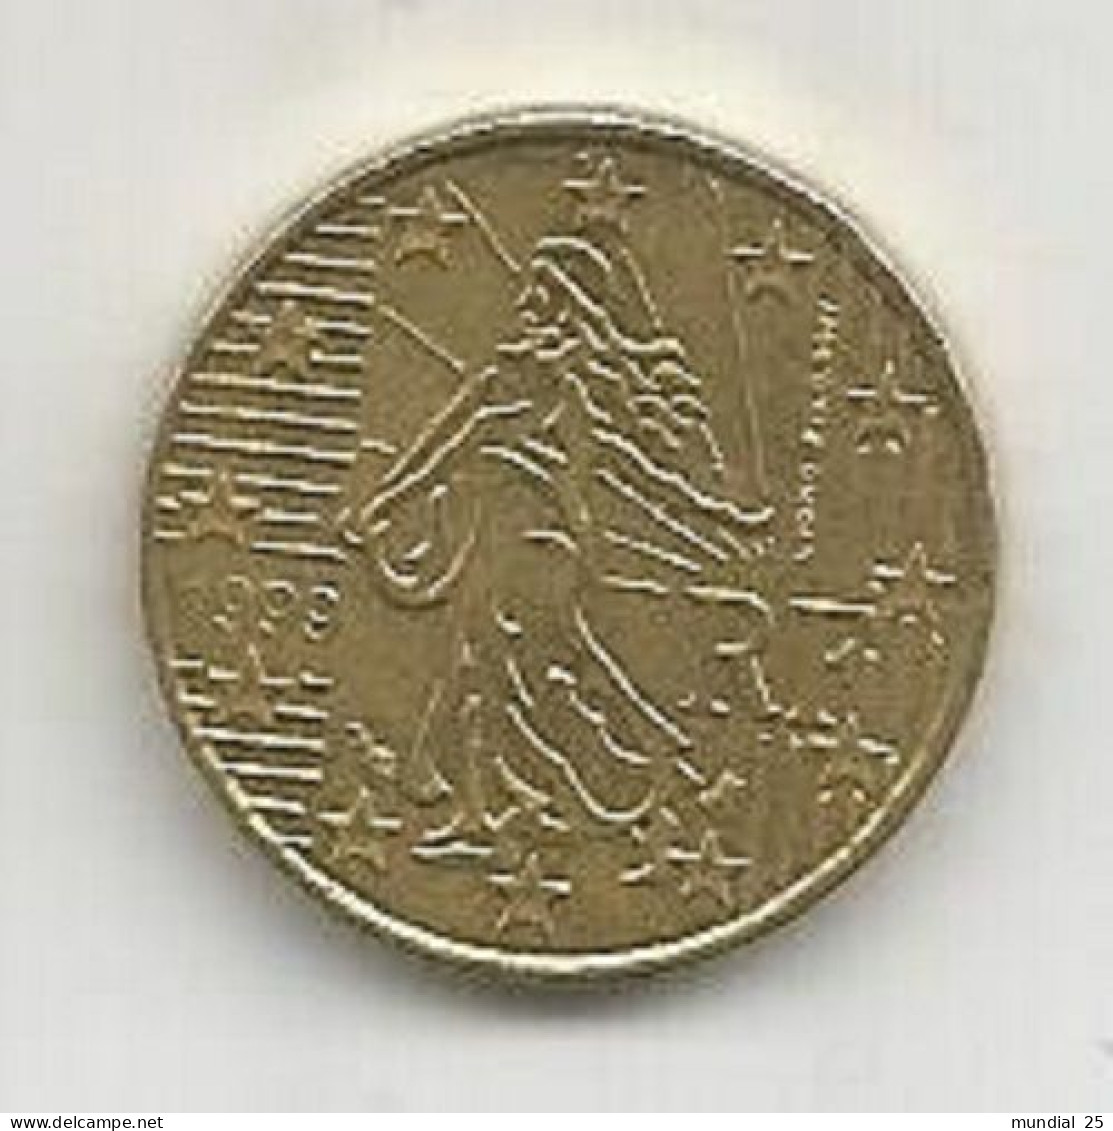 FRANCE 10 EURO CENT 1999 - France